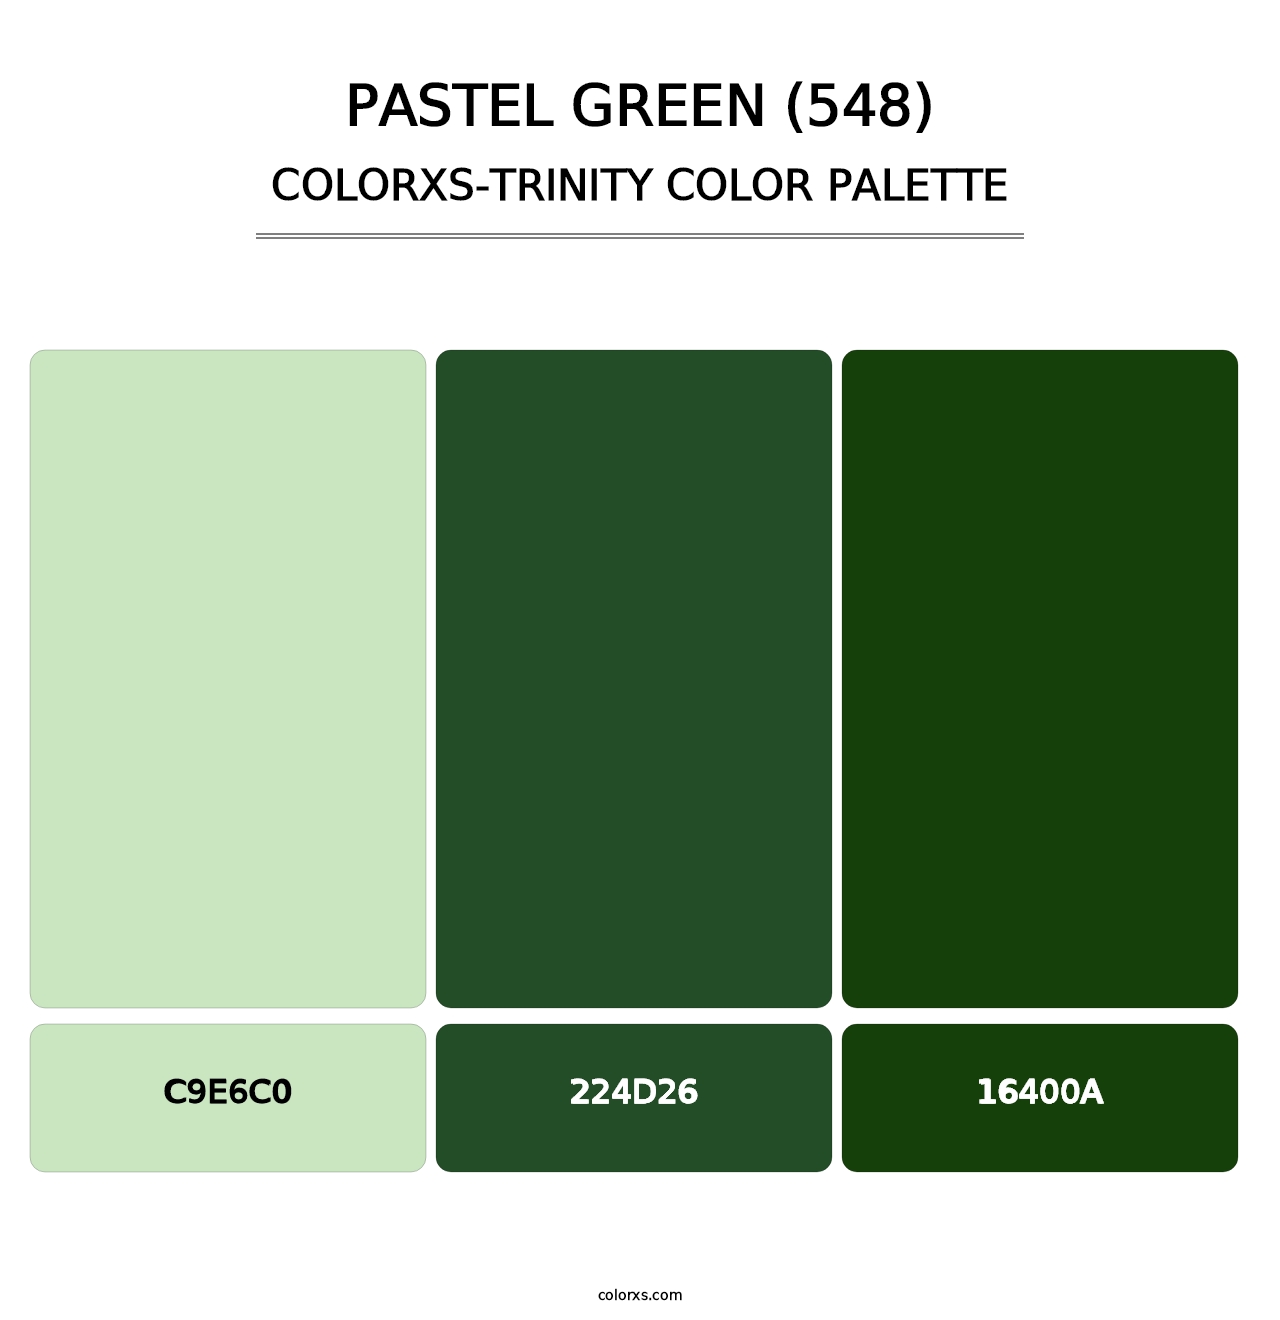 Pastel Green (548) - Colorxs Trinity Palette